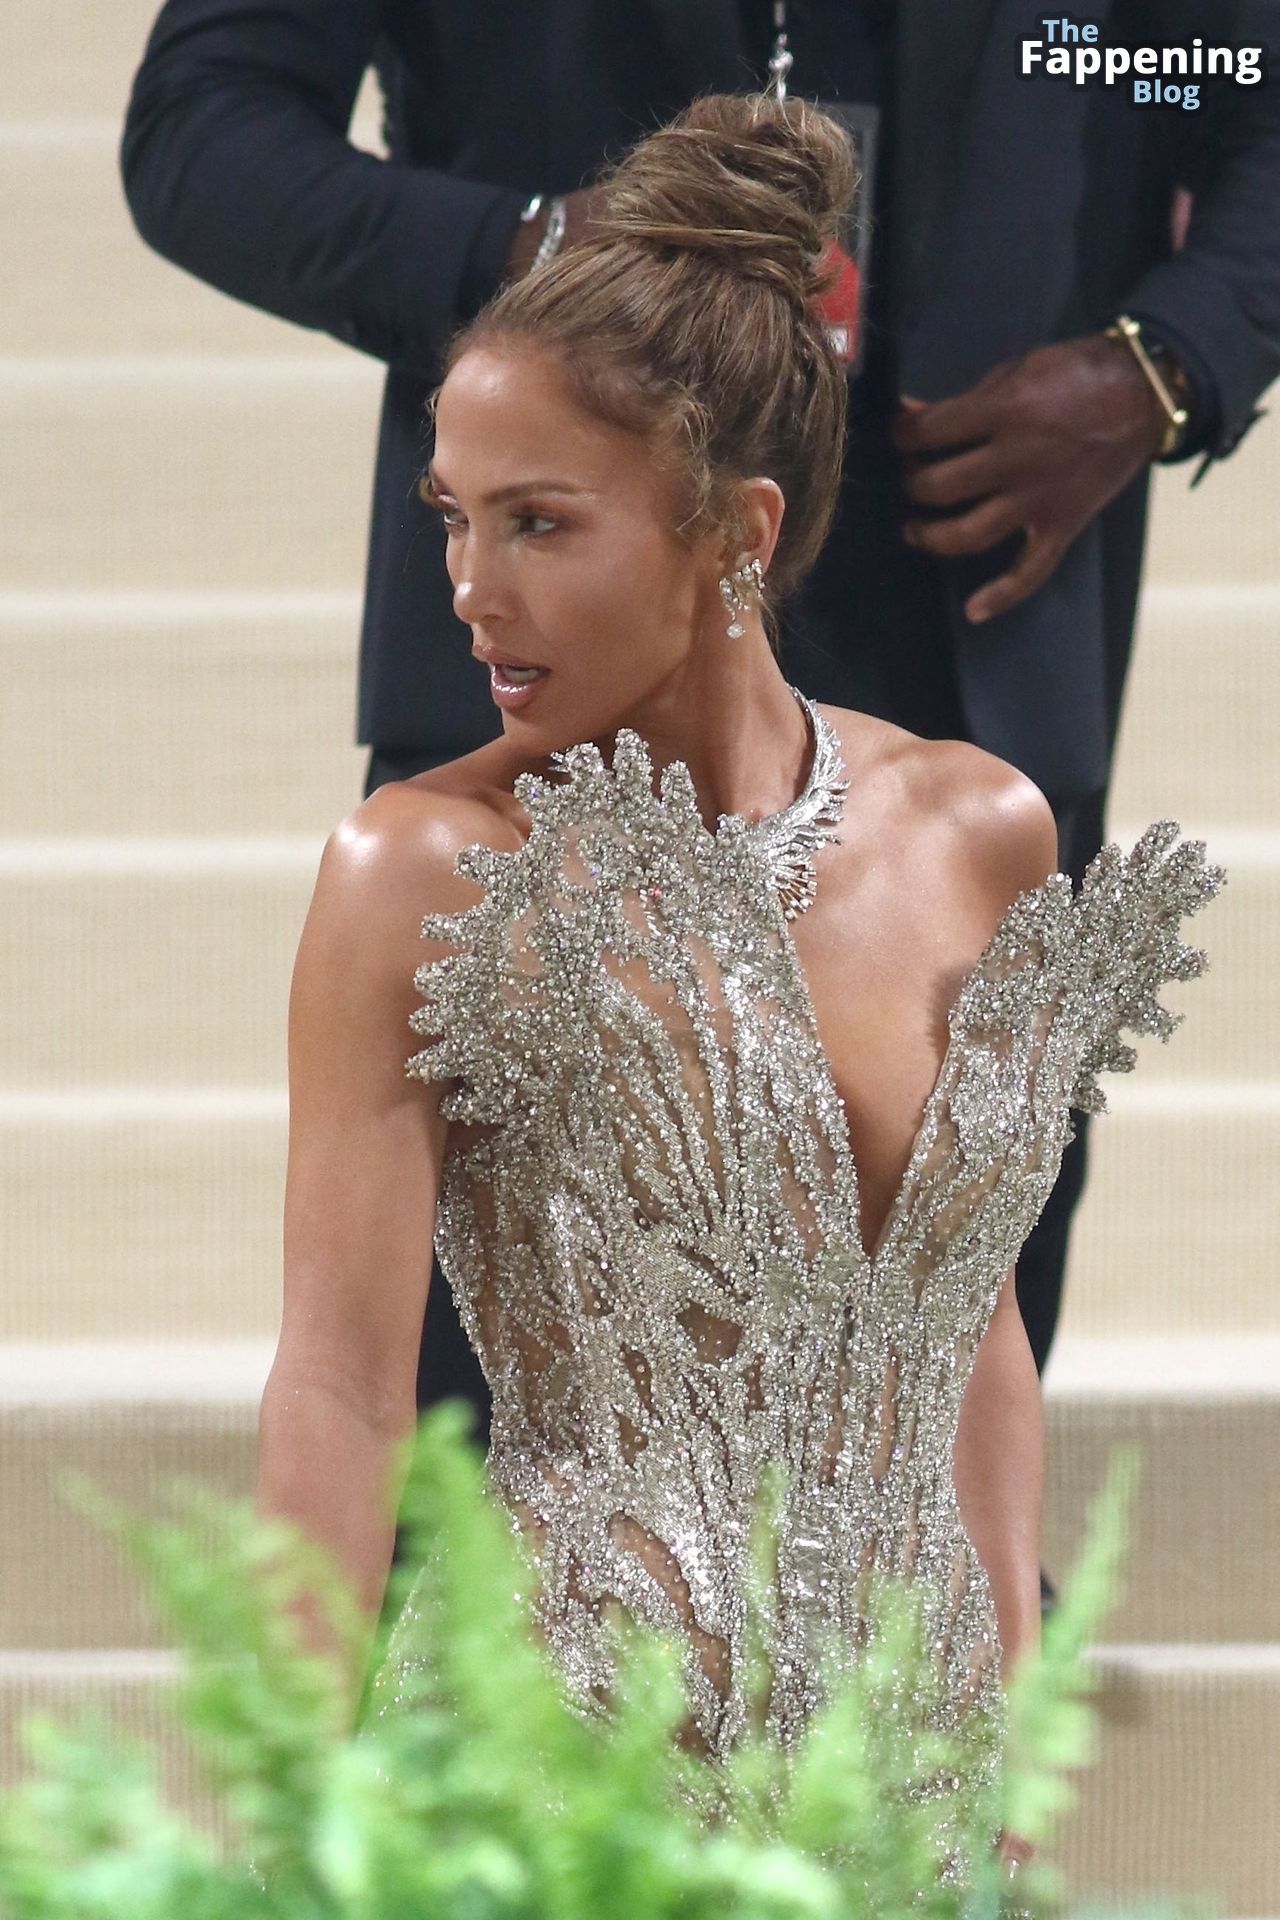 Jennifer-Lopez-Hot-82-The-Fappening-Blog.jpg